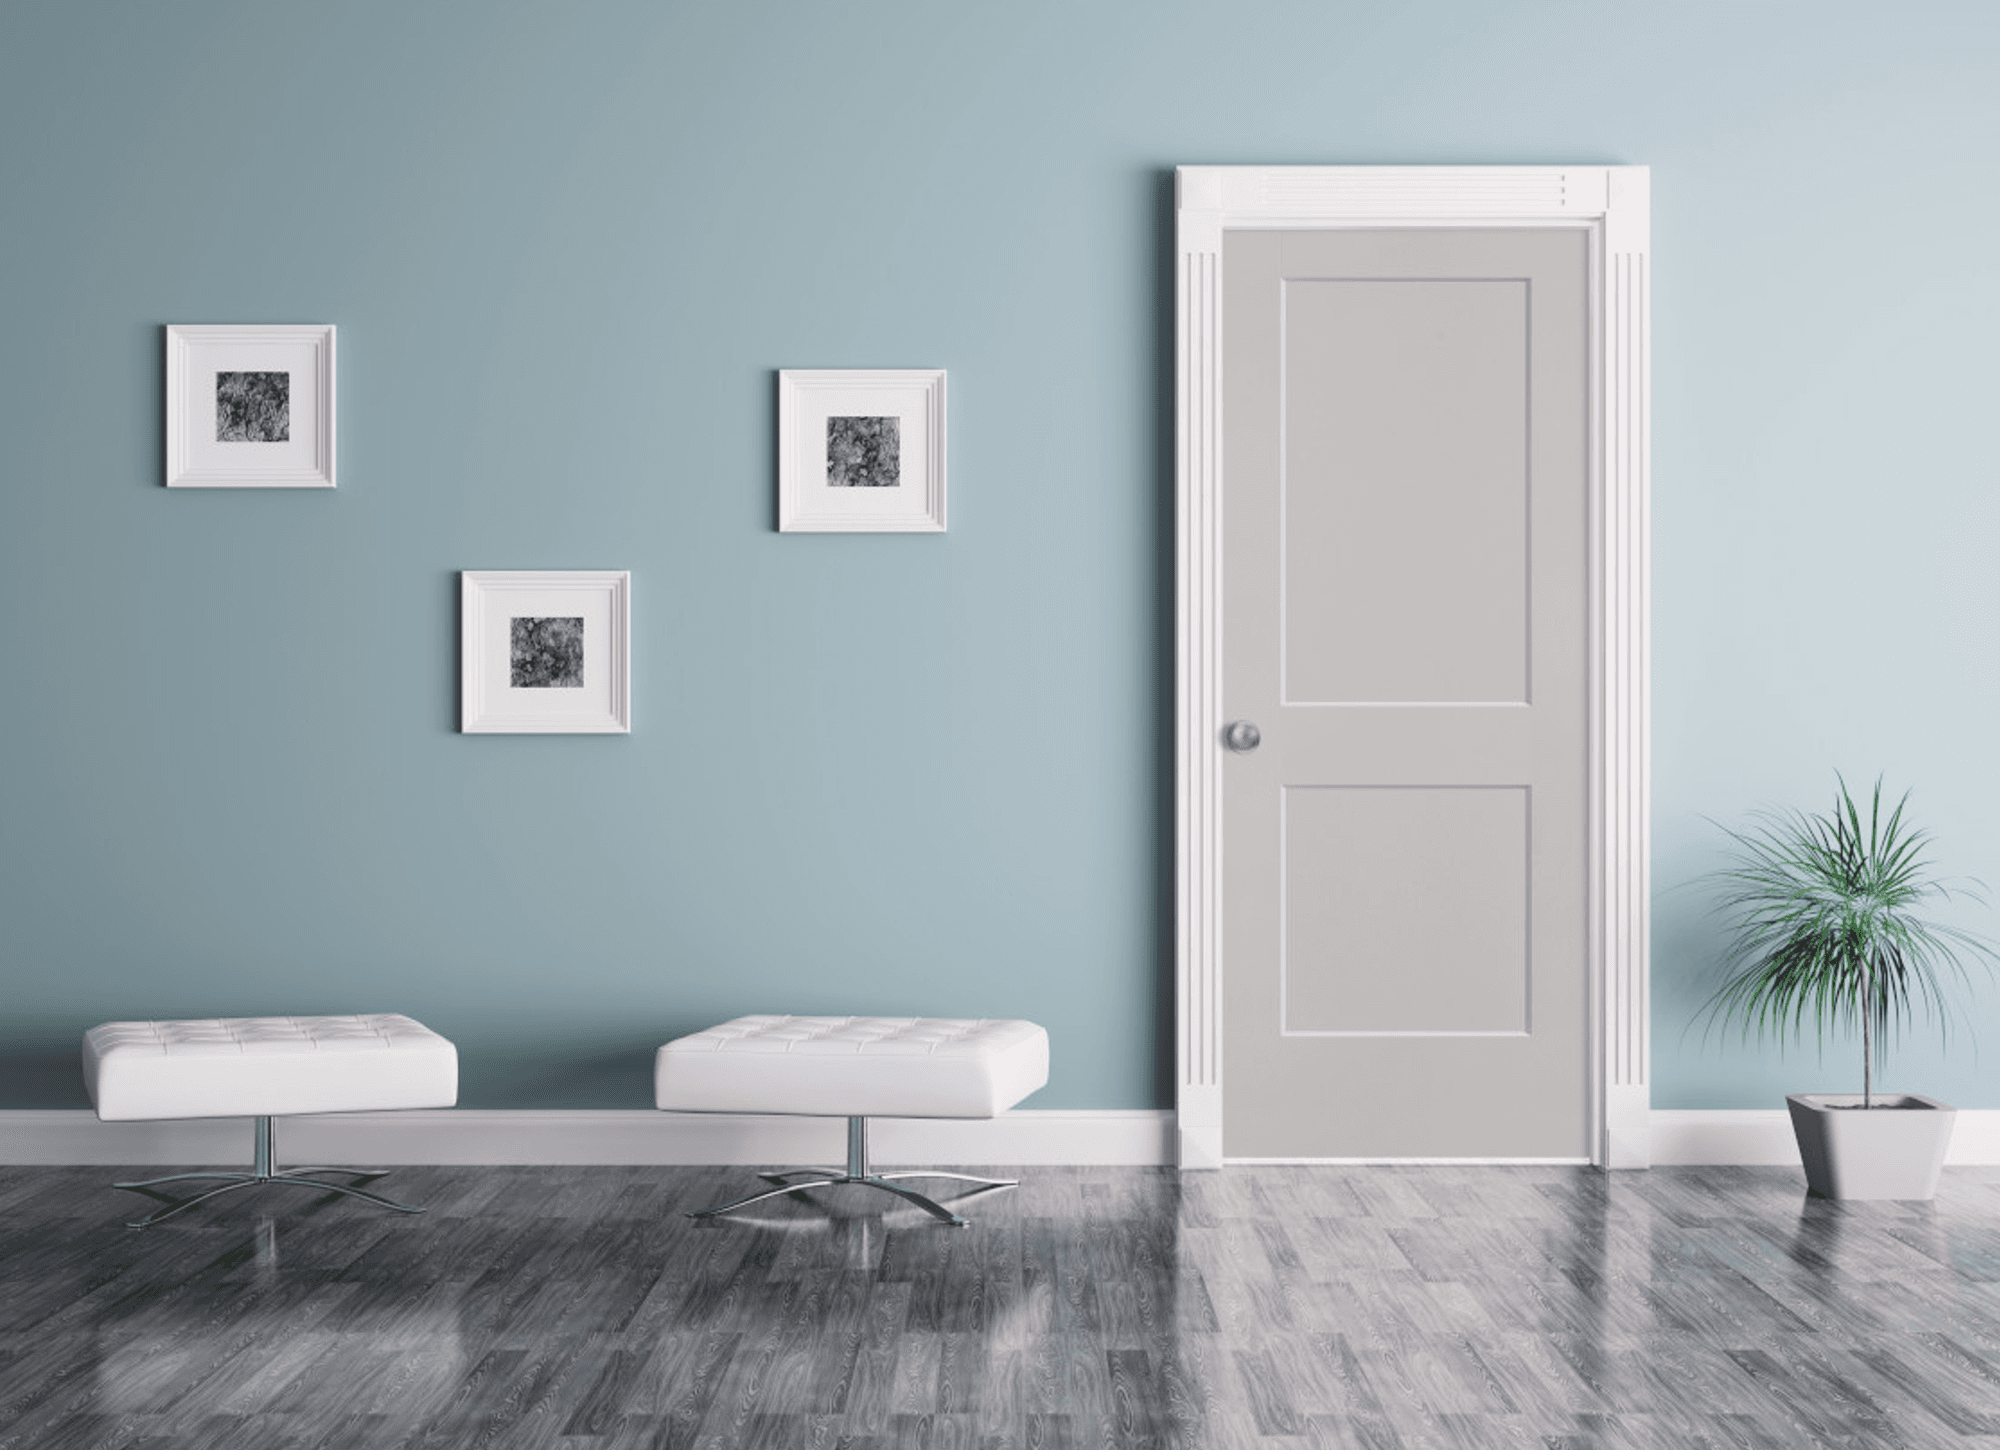 Masonite - Logan - Gray Door in Blue Room